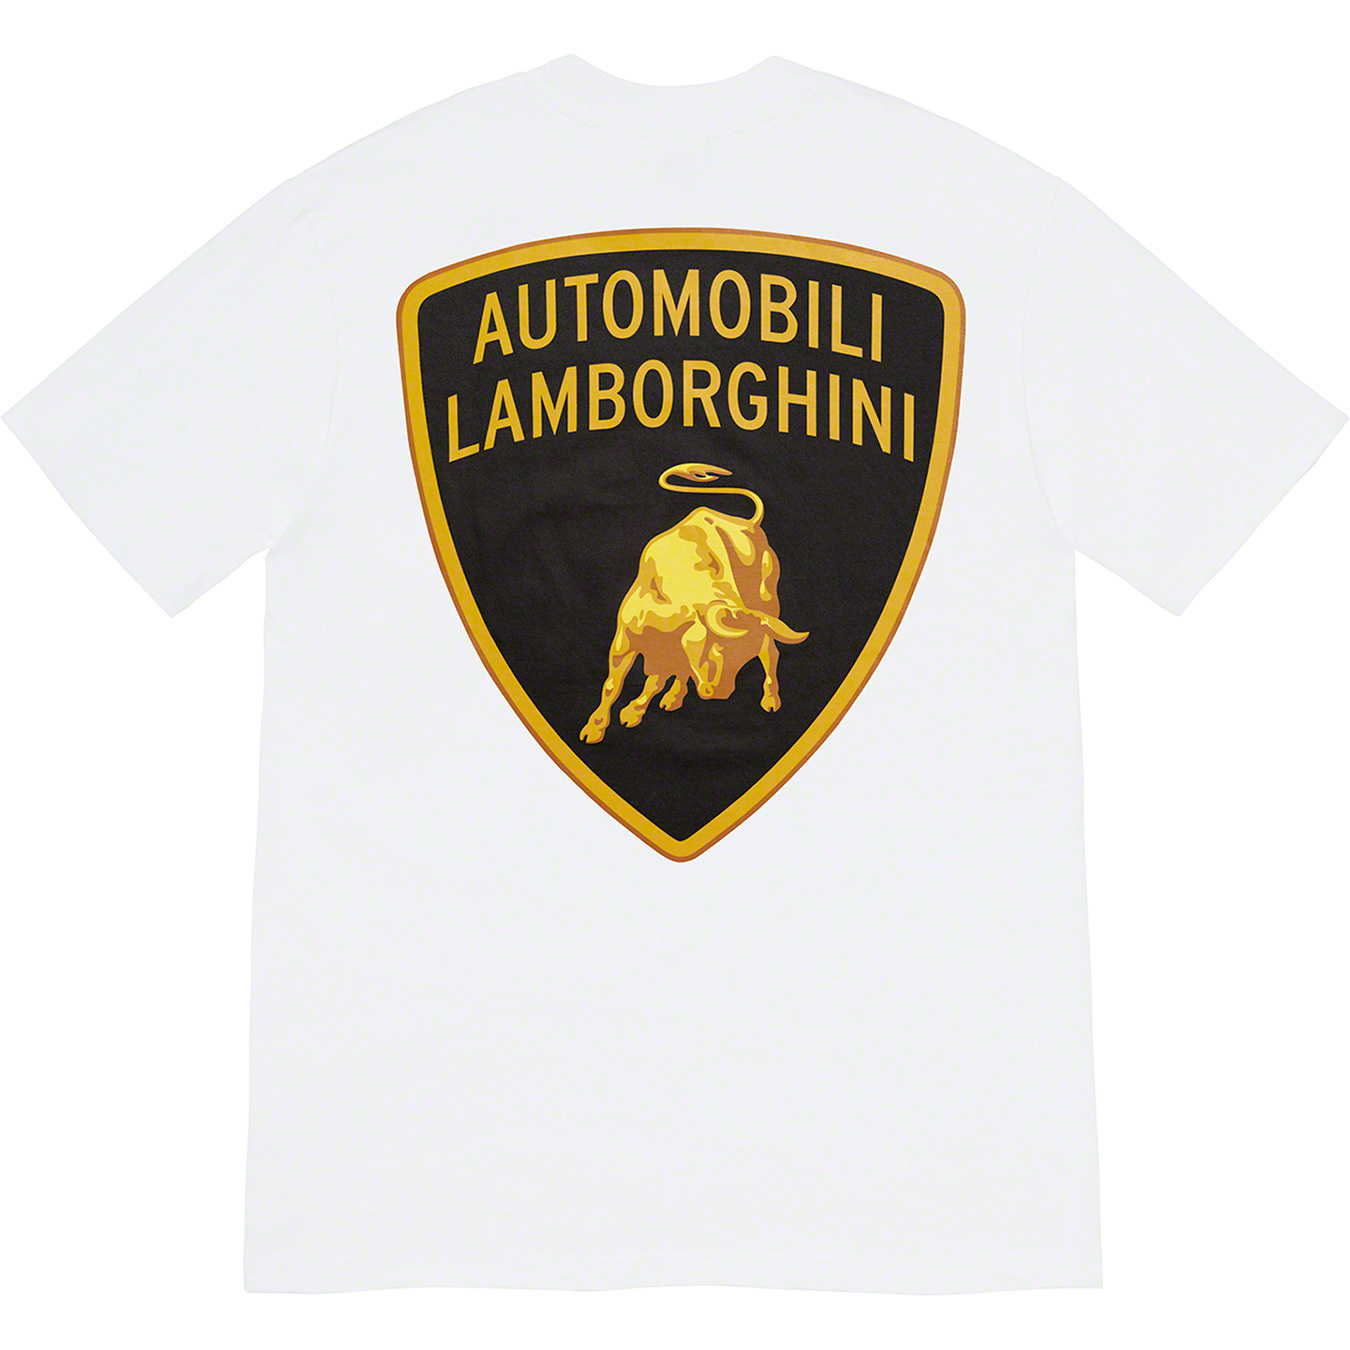 Automobili Lamborghini Tee - spring summer 2020 - Supreme